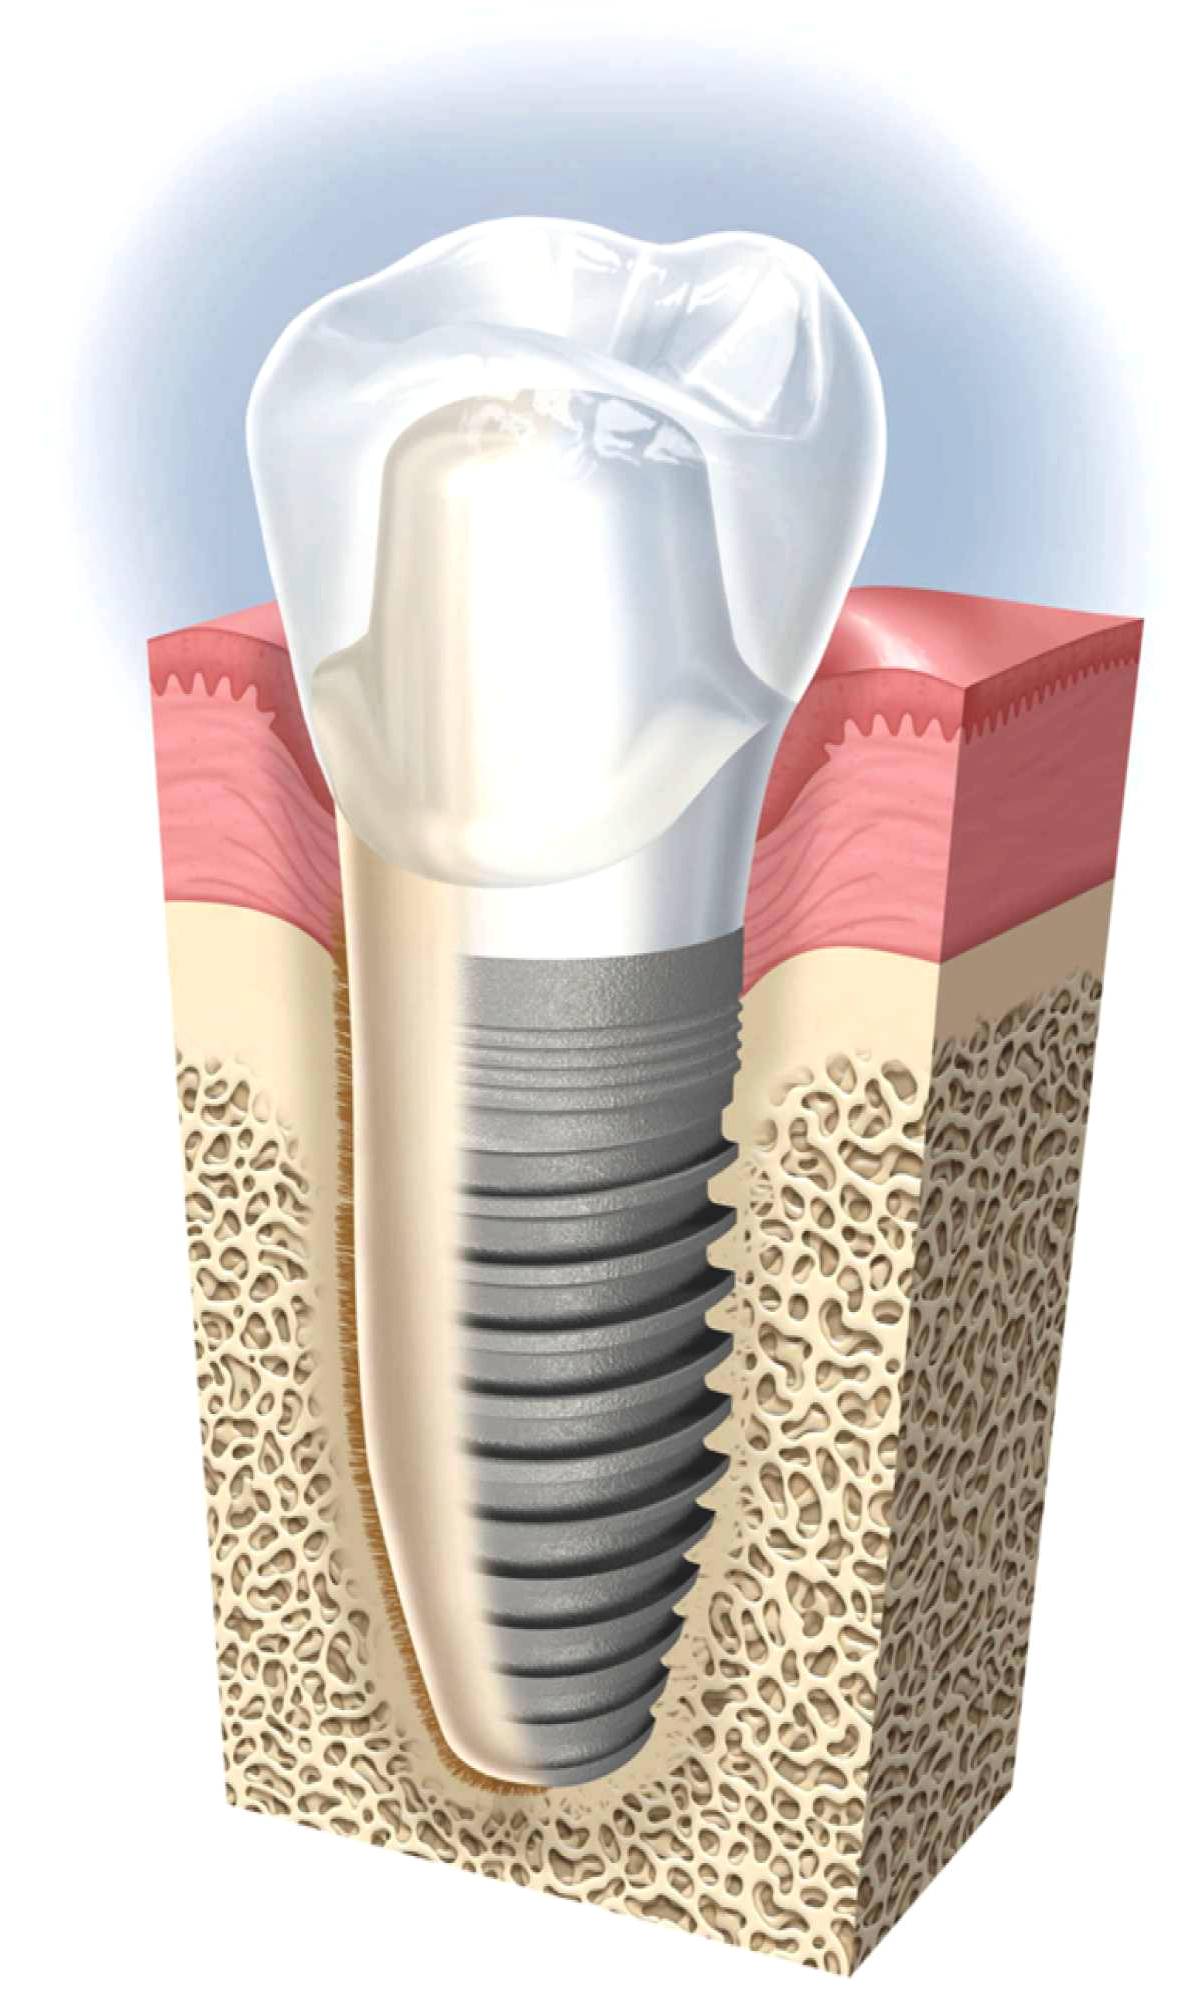 dental implants ryde cost